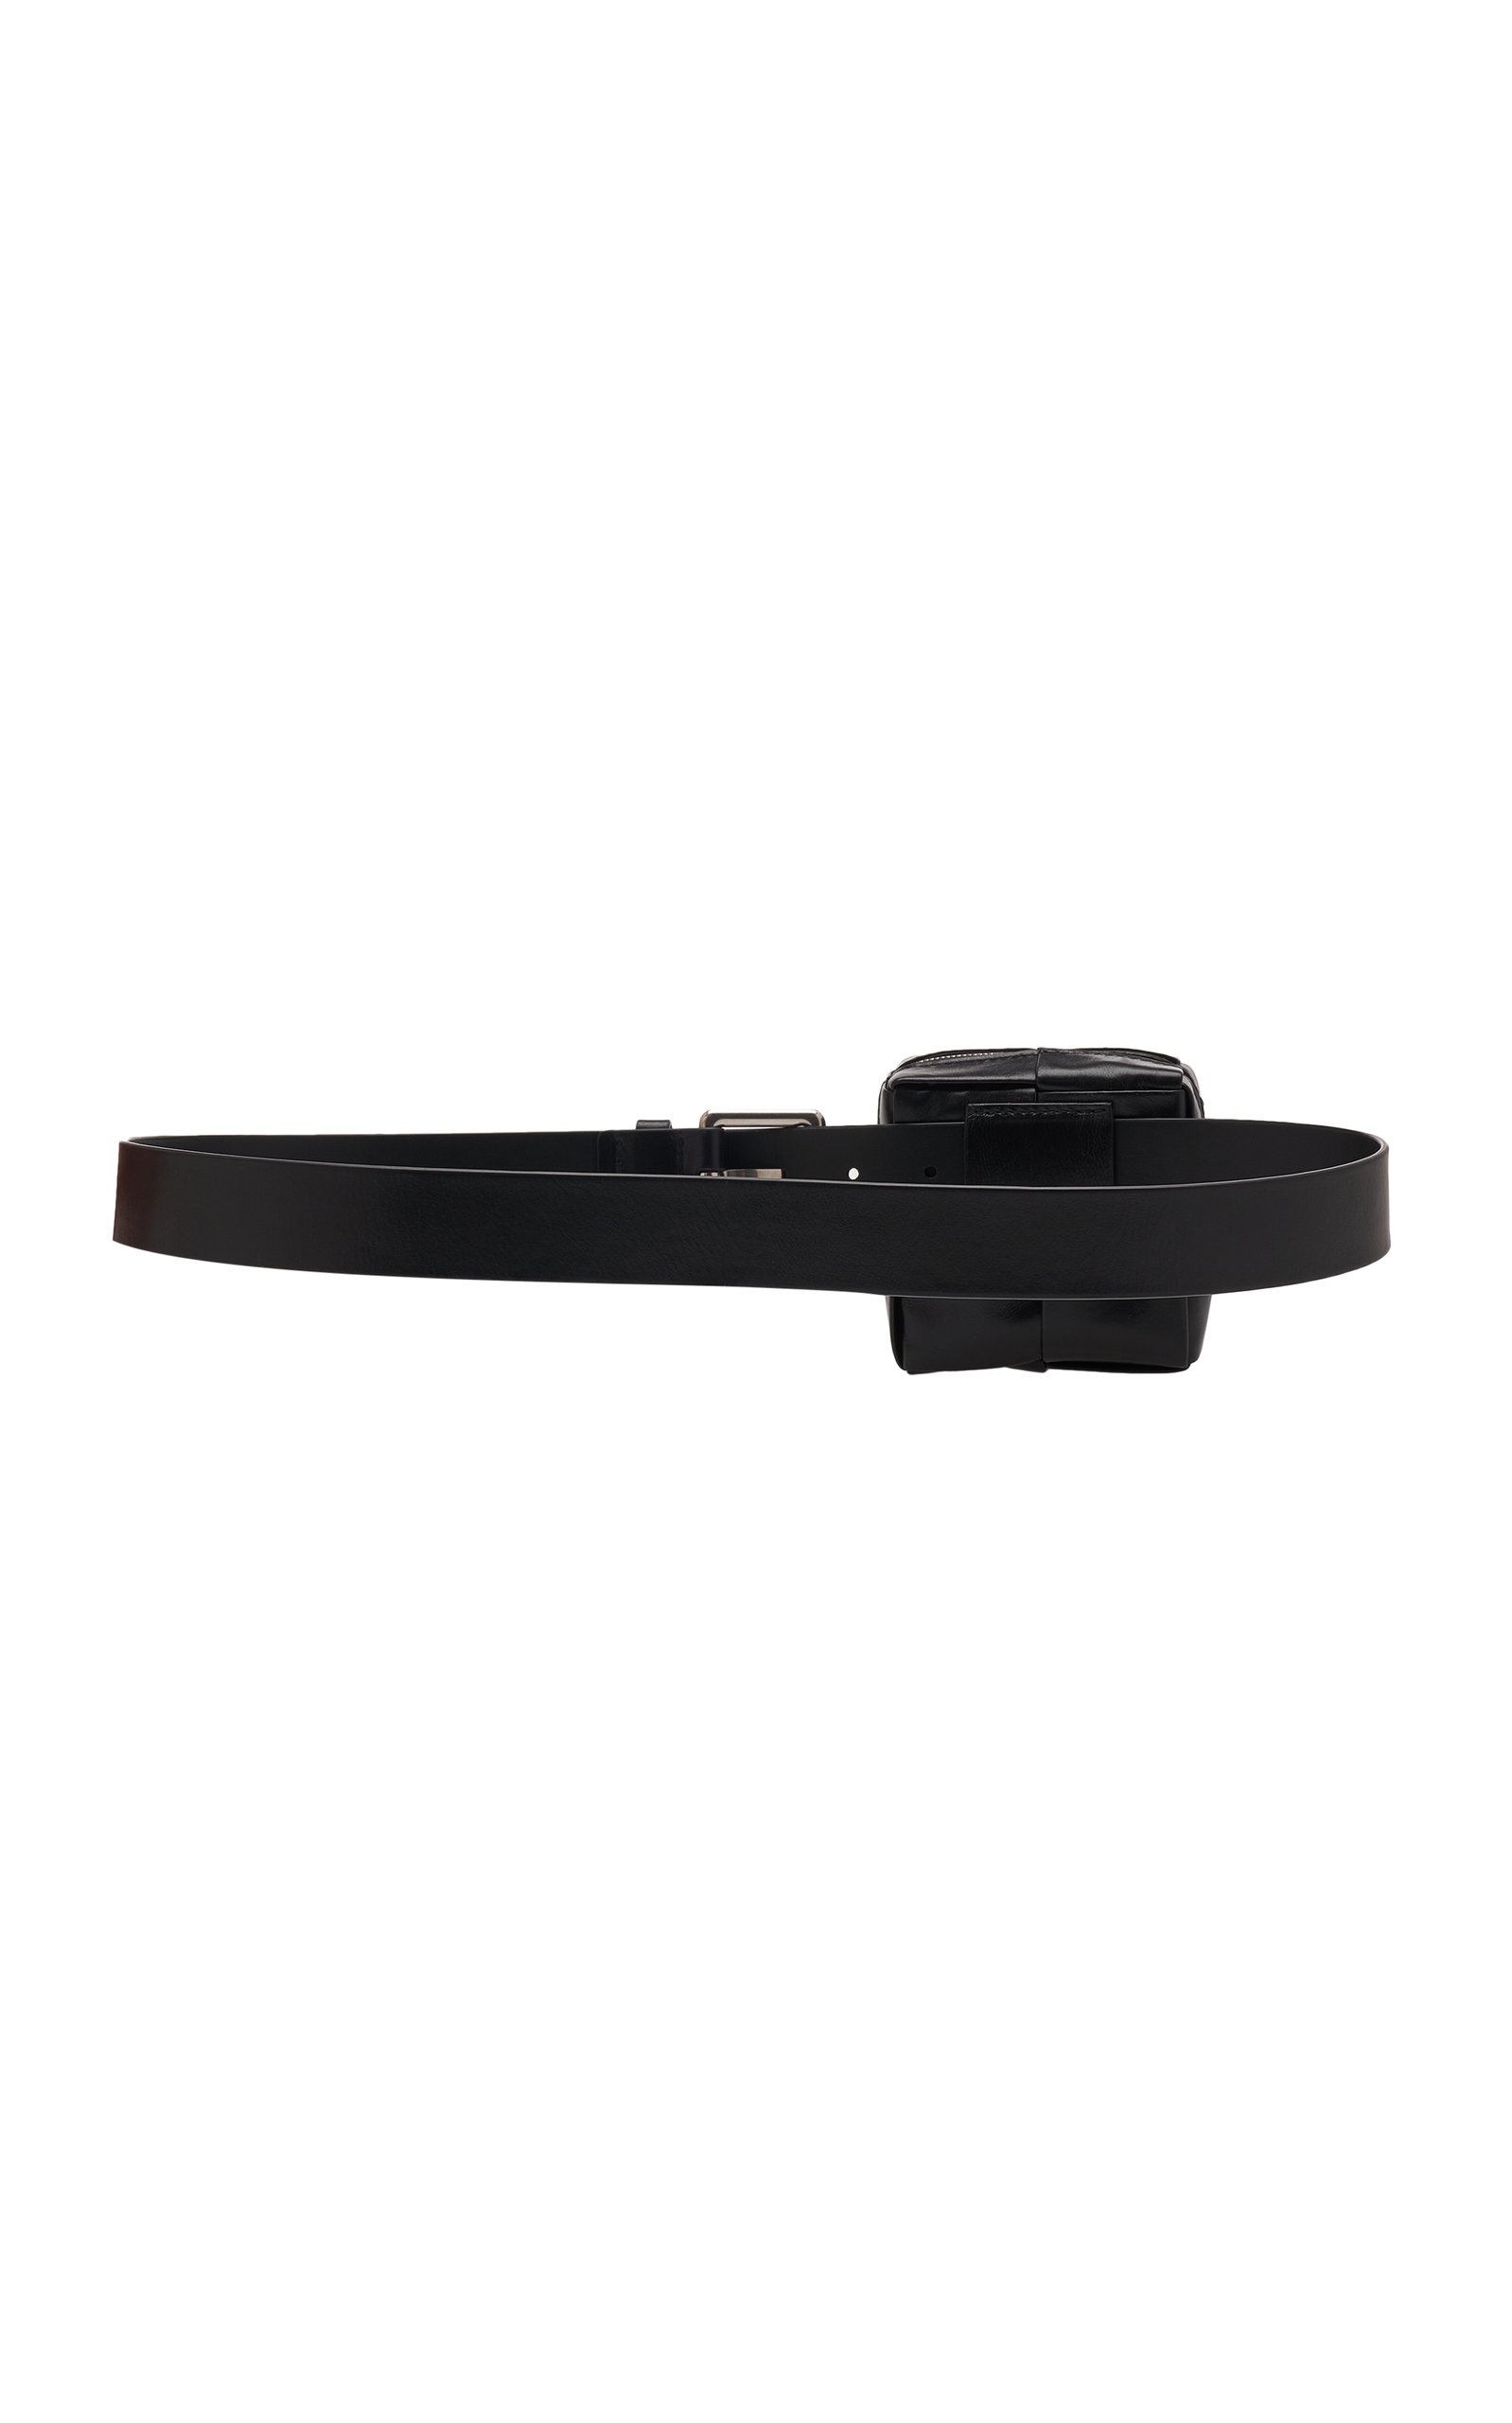 Cassette Pouch Leather Waist Belt black - 4